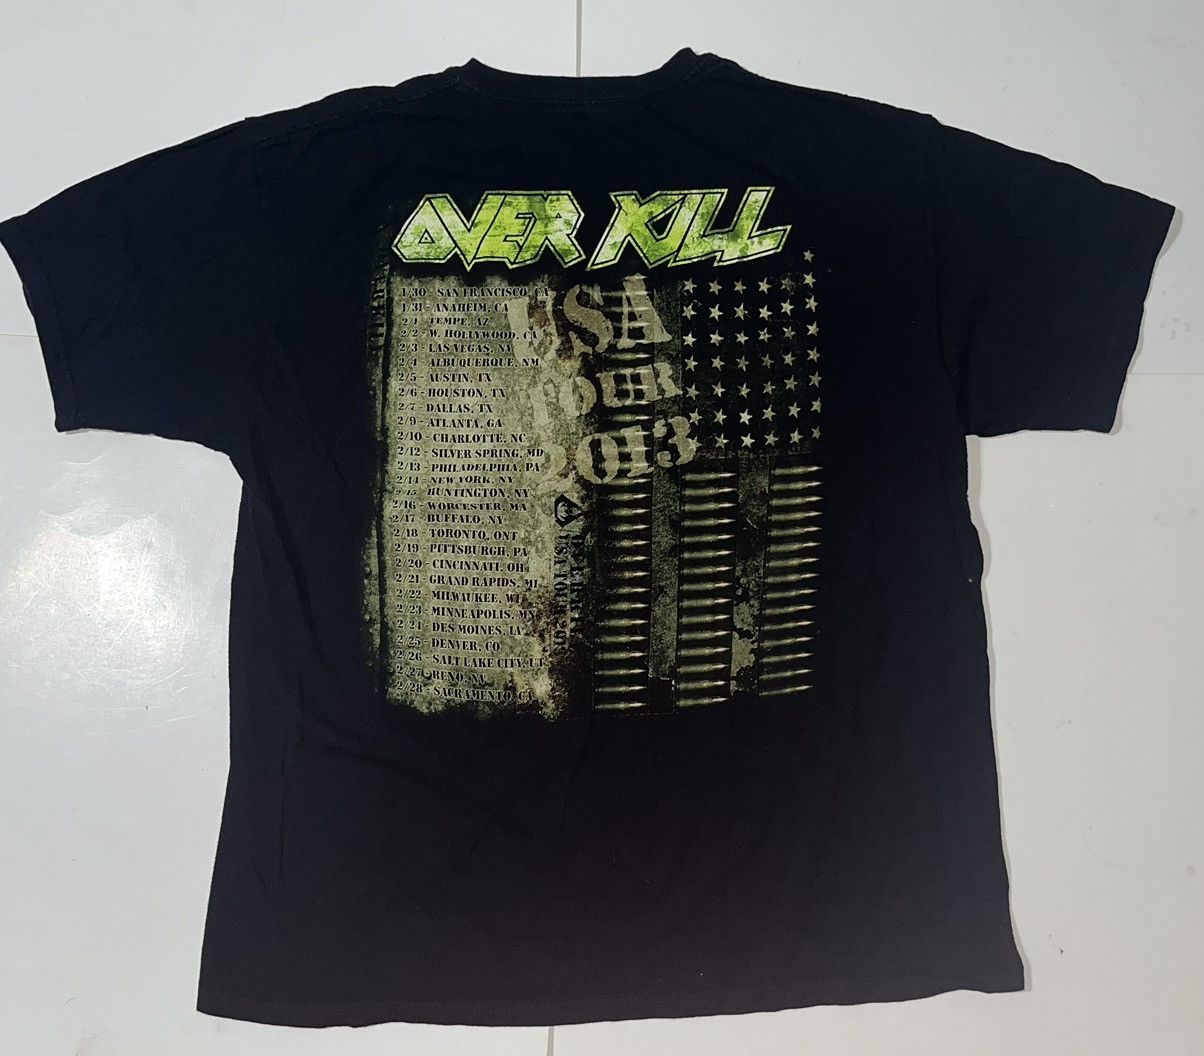 Band Tees Overkill 2013 Official Tour Shirt Size US XL / EU 56 / 4 - 5 Thumbnail